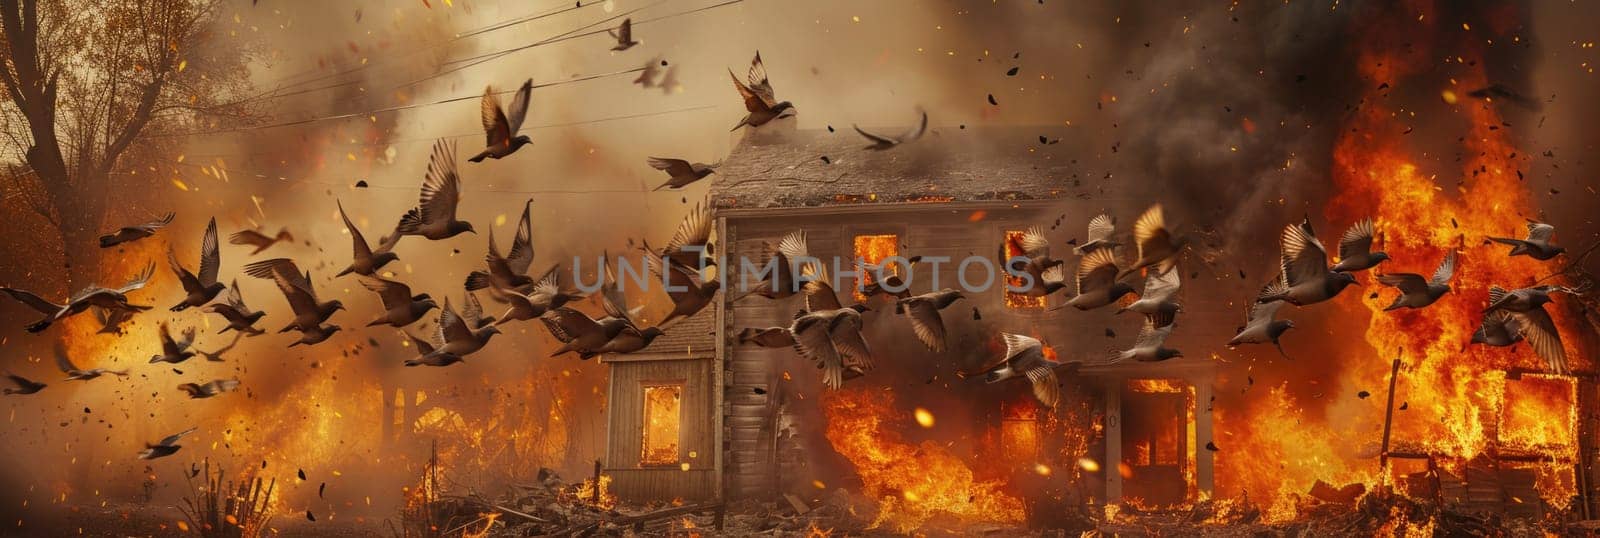 A group of birds in flight soaring above a raging, fiery inferno.